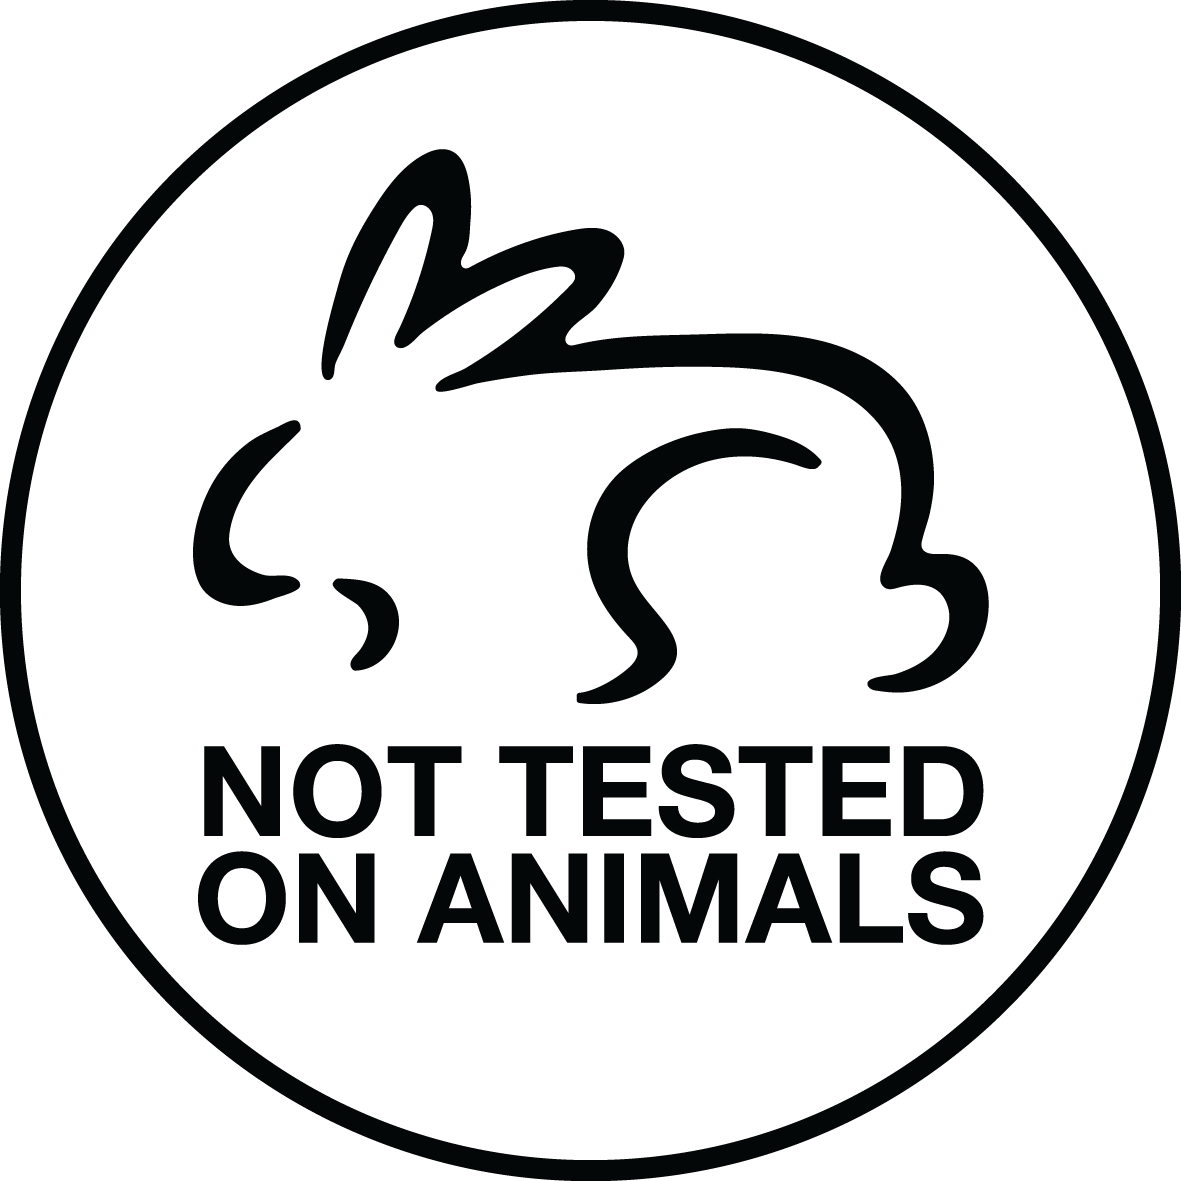 kisspng-cruelty-free-animal-testing-logo-organization-peop-exam-5acae23f3b3062.5927502215232456312425.png